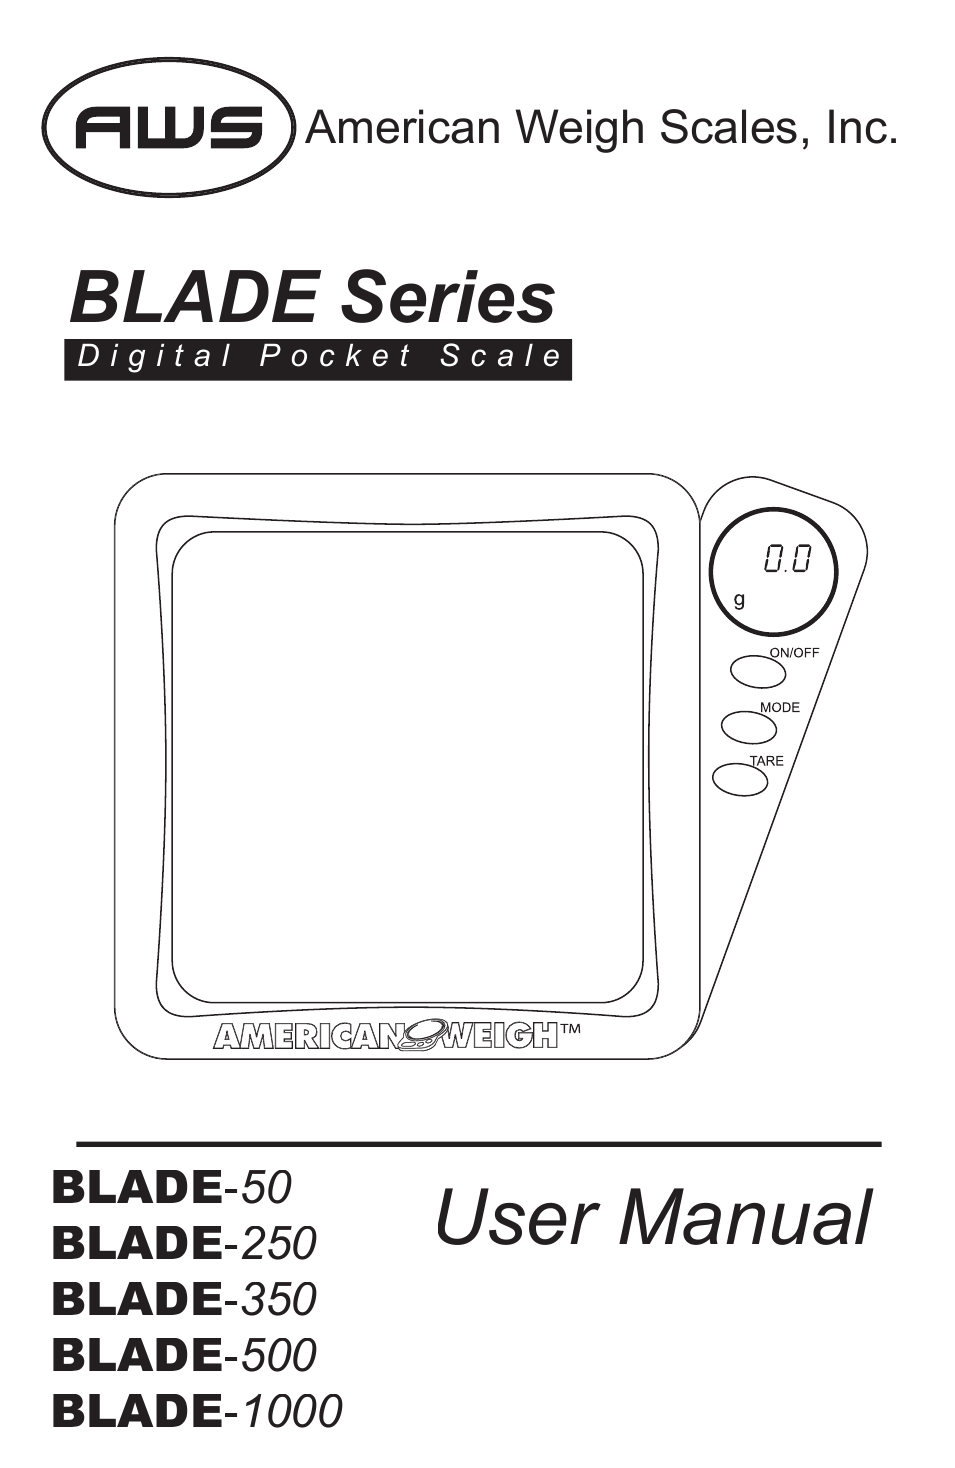 Blade-350